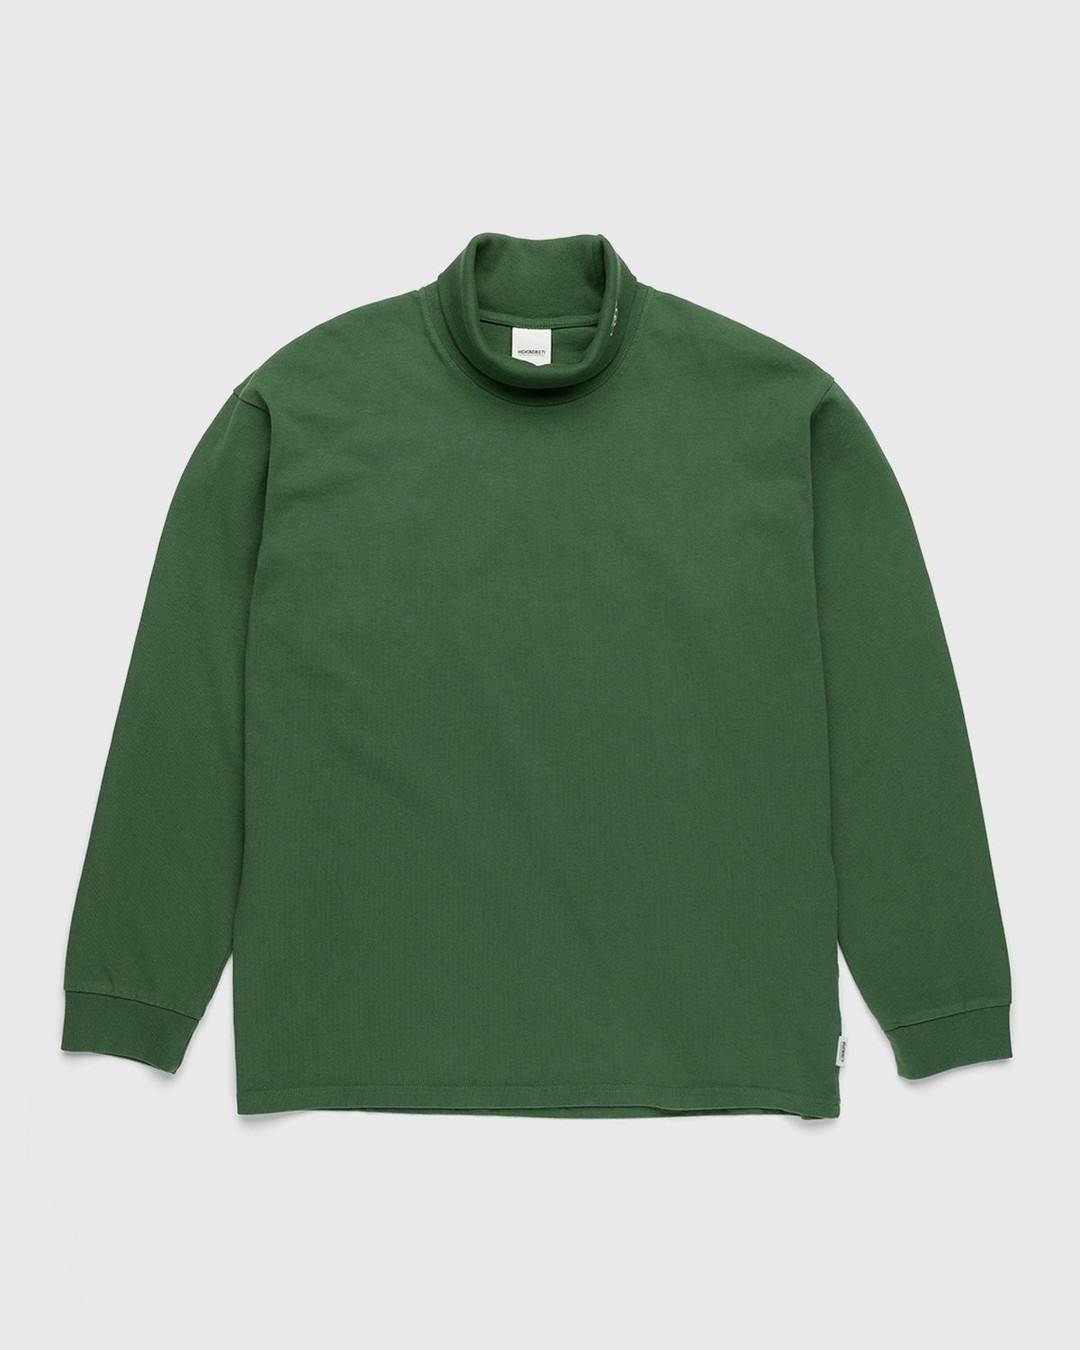 Highsnobiety – Heavy Staples Turtleneck Green - Sweatshirts - Green - Image 1